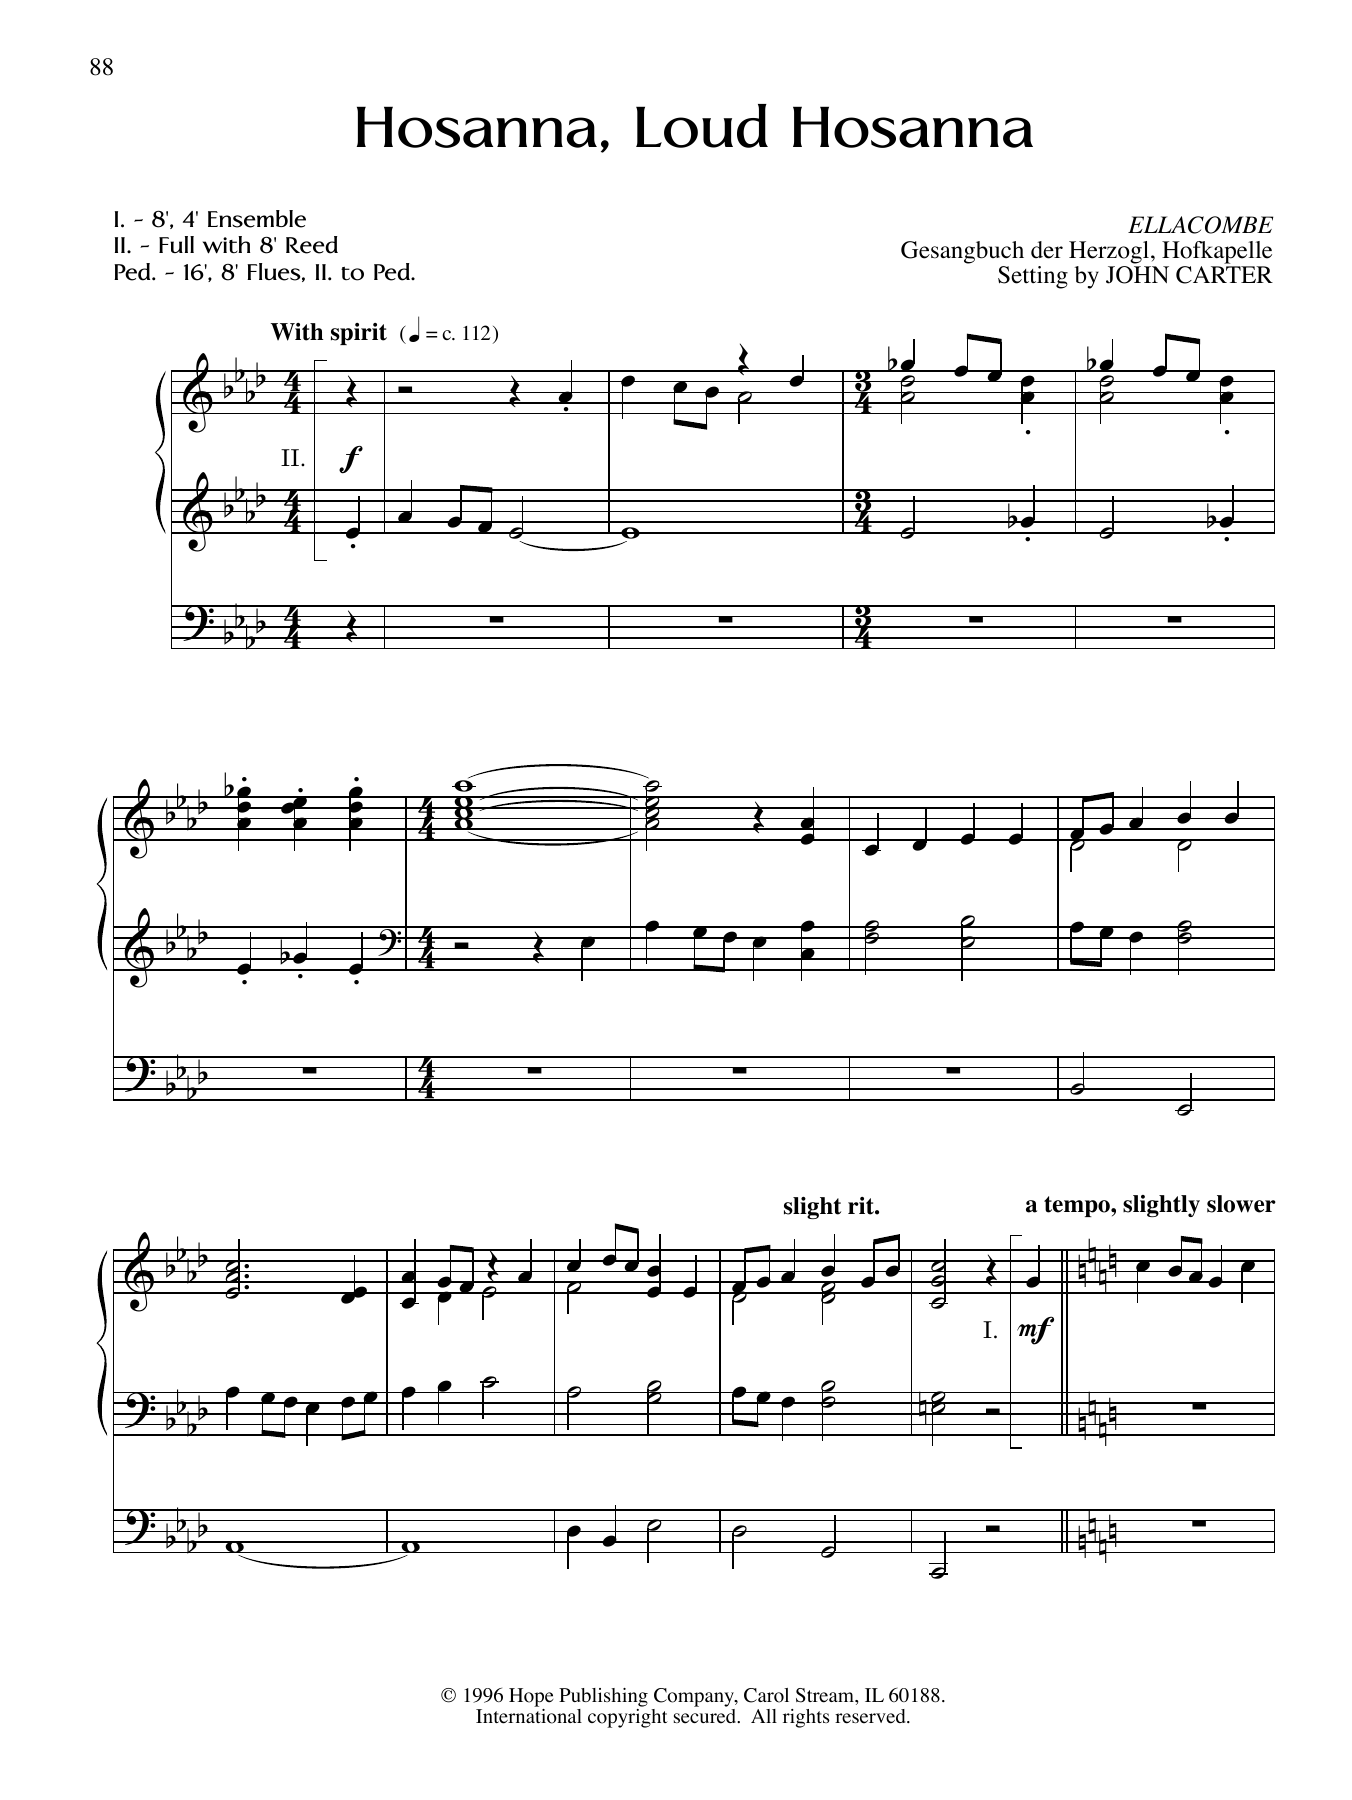 Download John Carter Hosanna, Loud Hosanna Sheet Music and learn how to play Organ PDF digital score in minutes